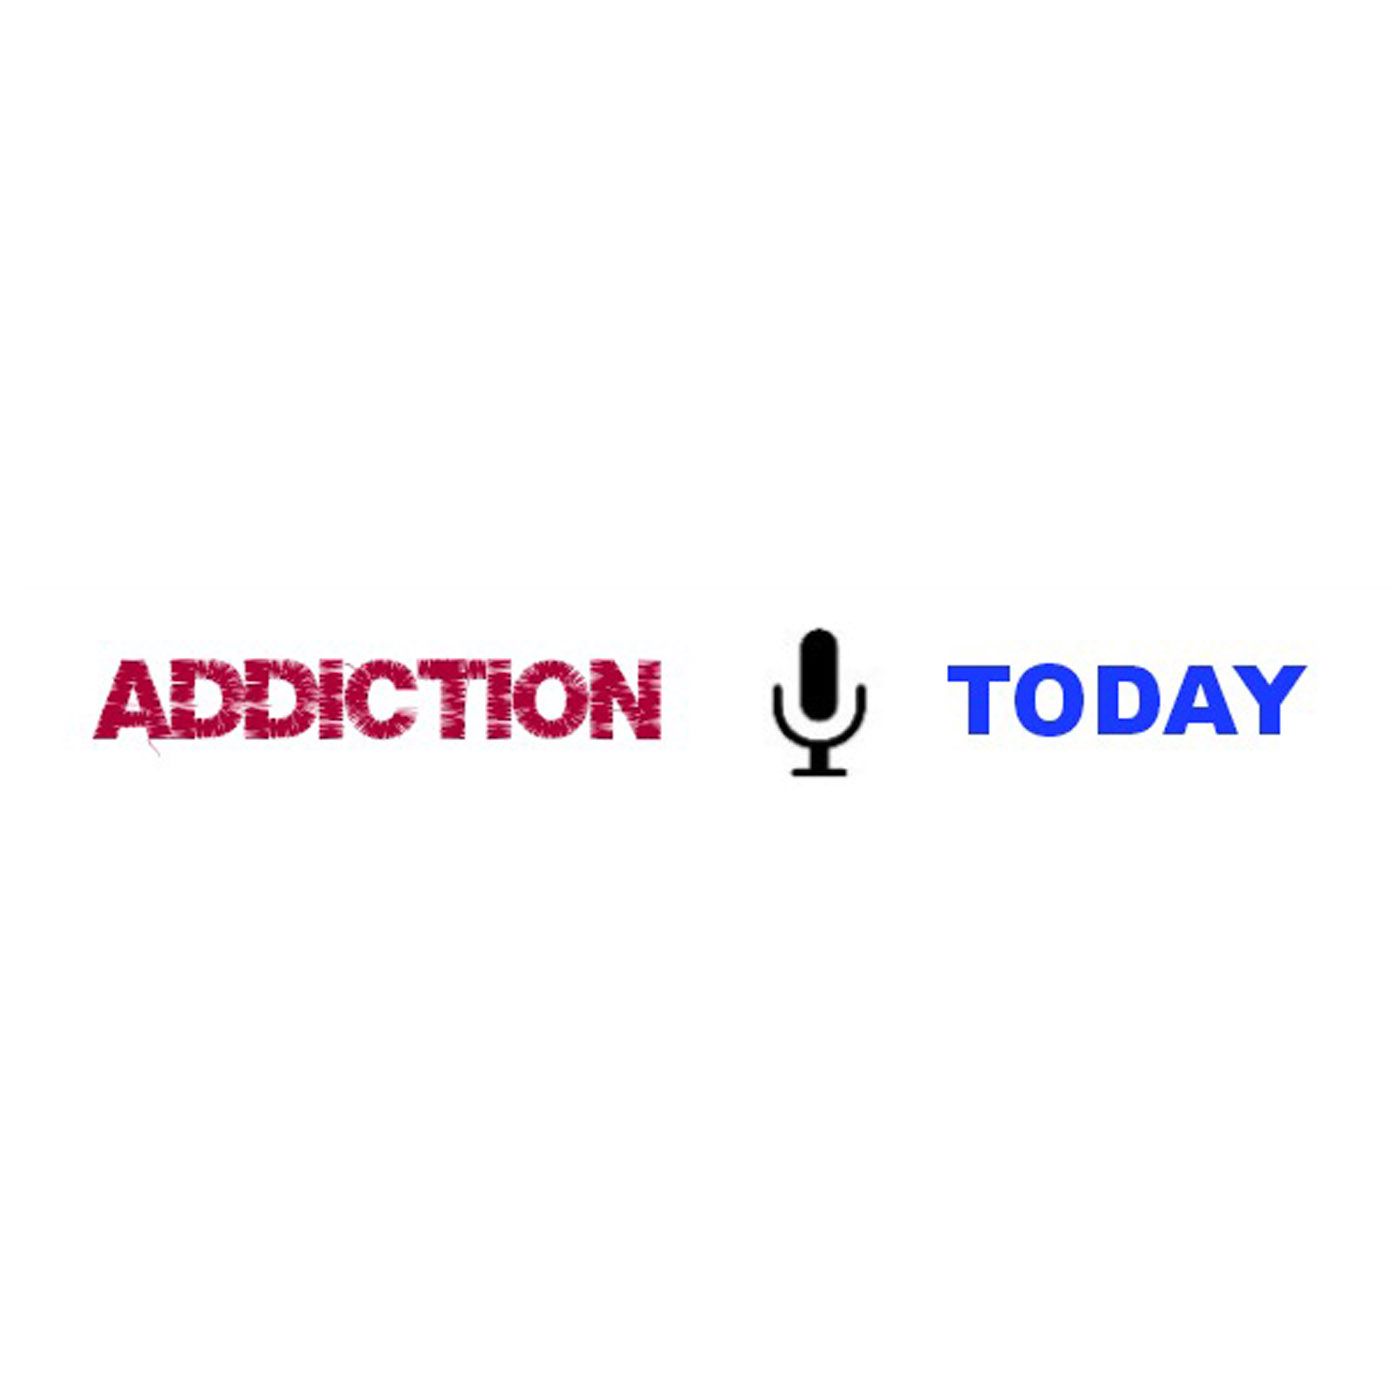 Addiction Today